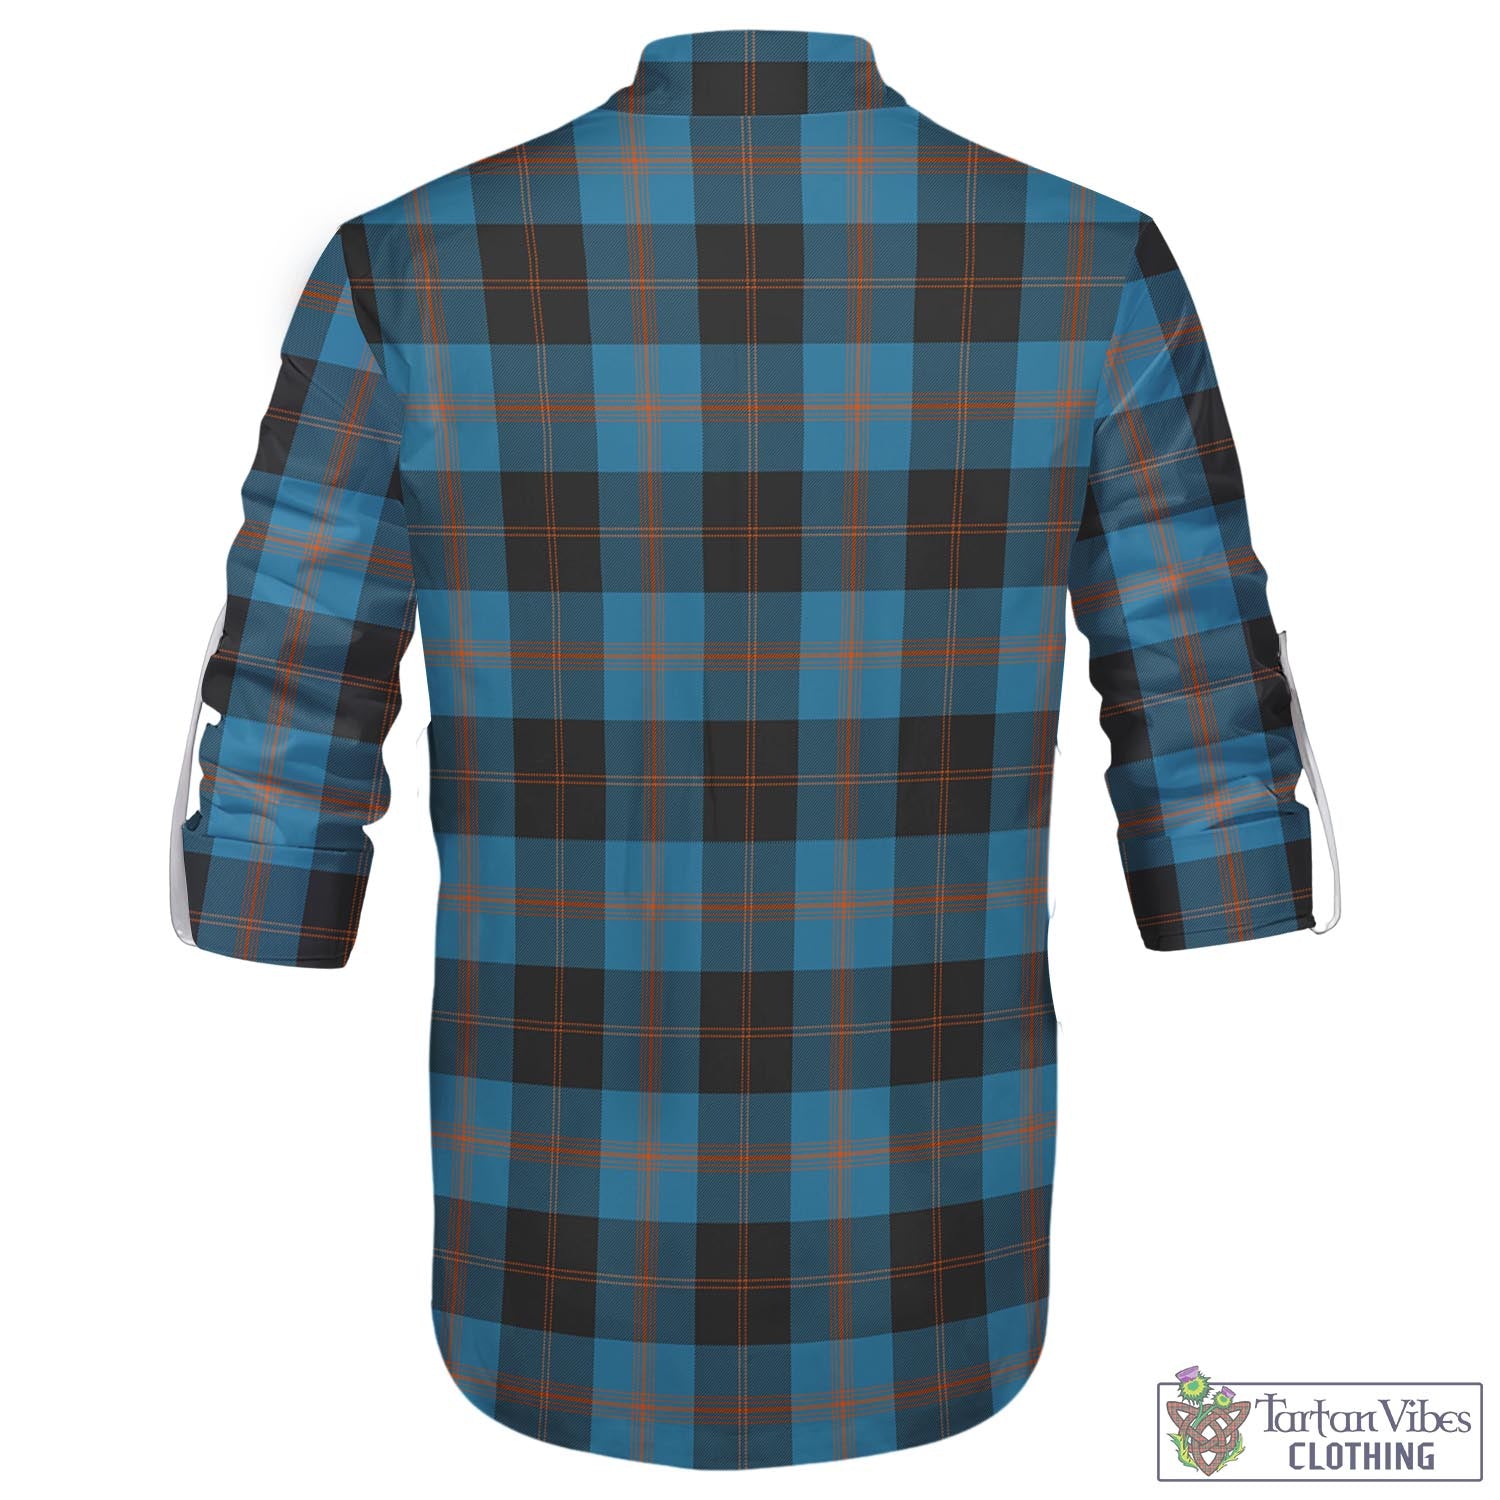 Tartan Vibes Clothing Garden Tartan Men's Scottish Traditional Jacobite Ghillie Kilt Shirt with Family Crest